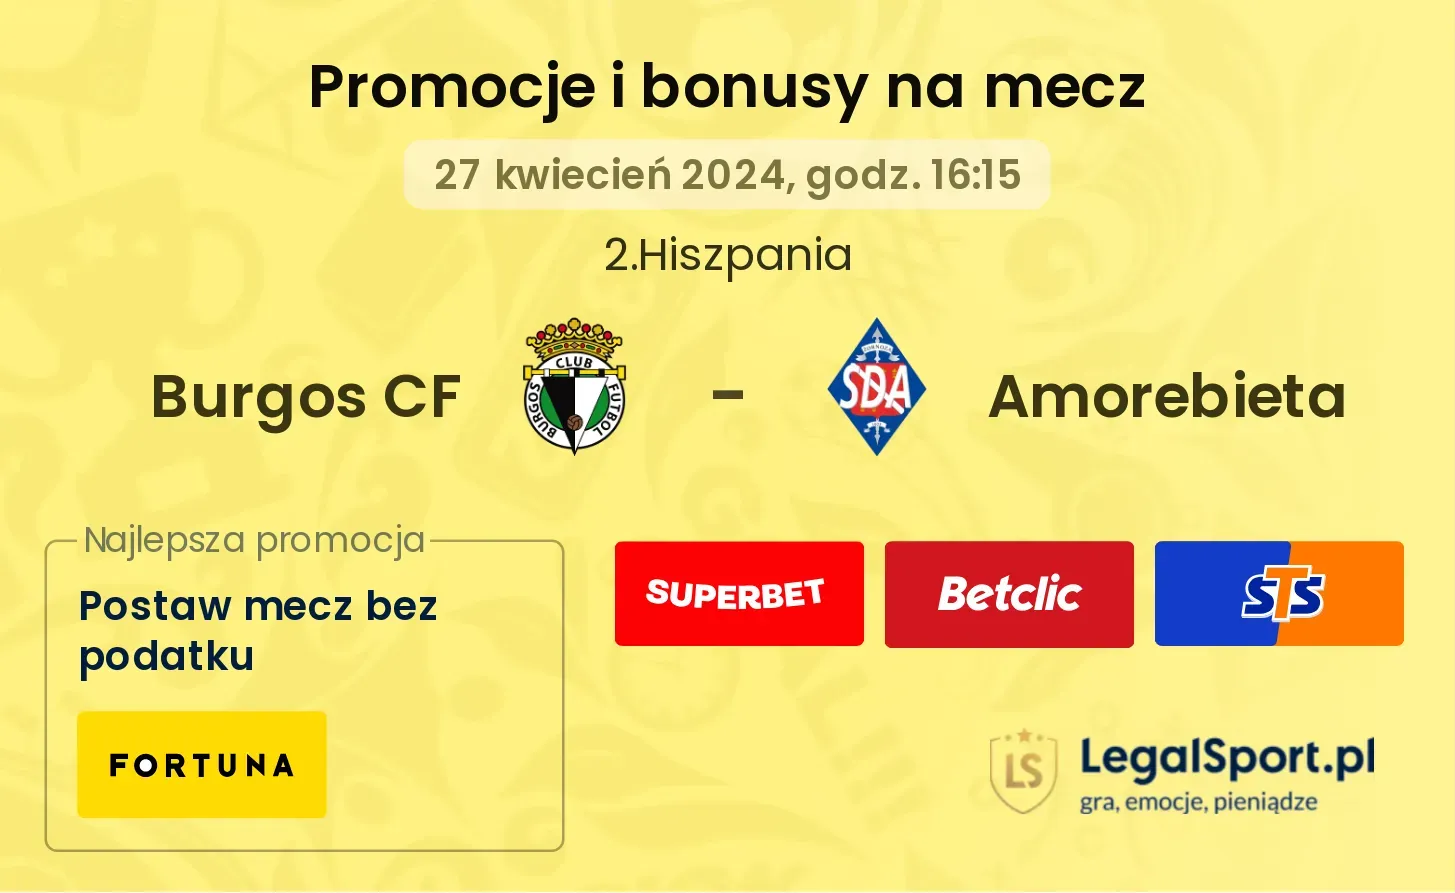 Burgos CF - Amorebieta promocje bonusy na mecz